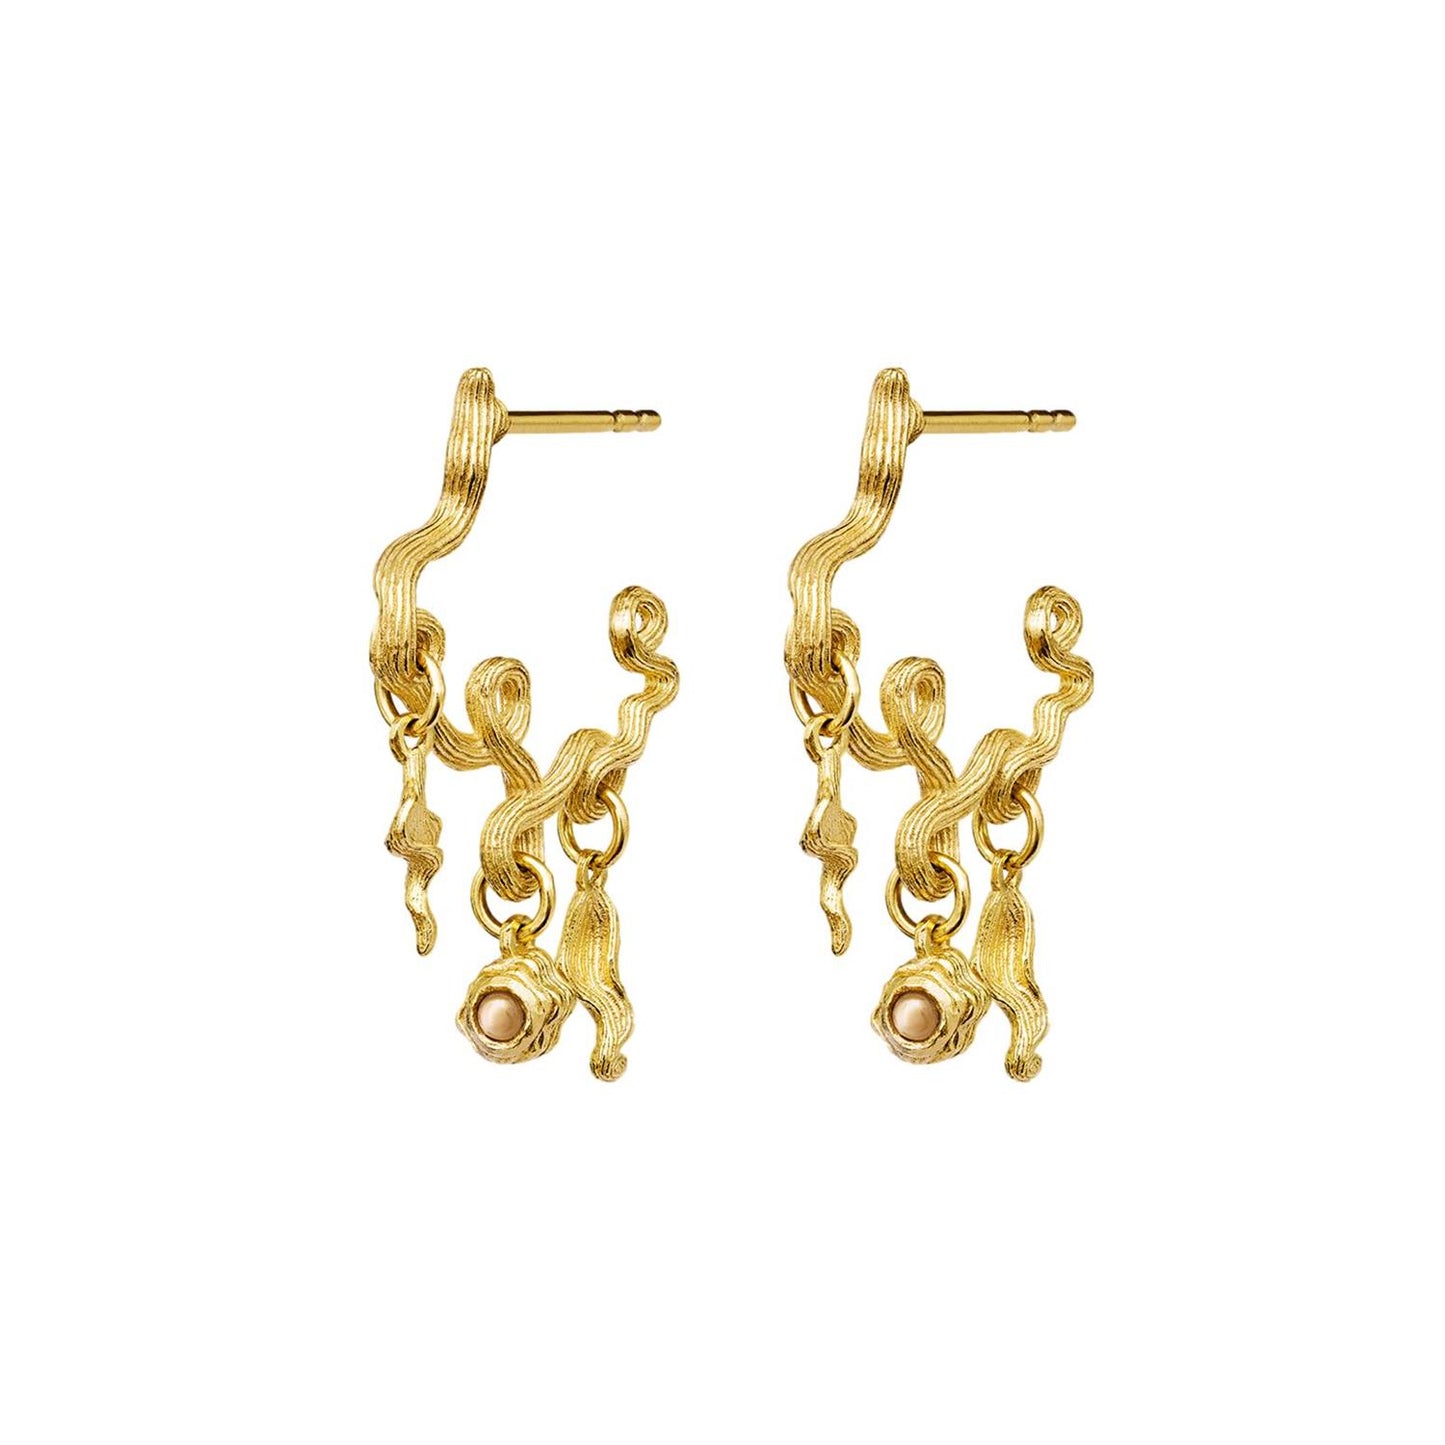 Rayon earrings